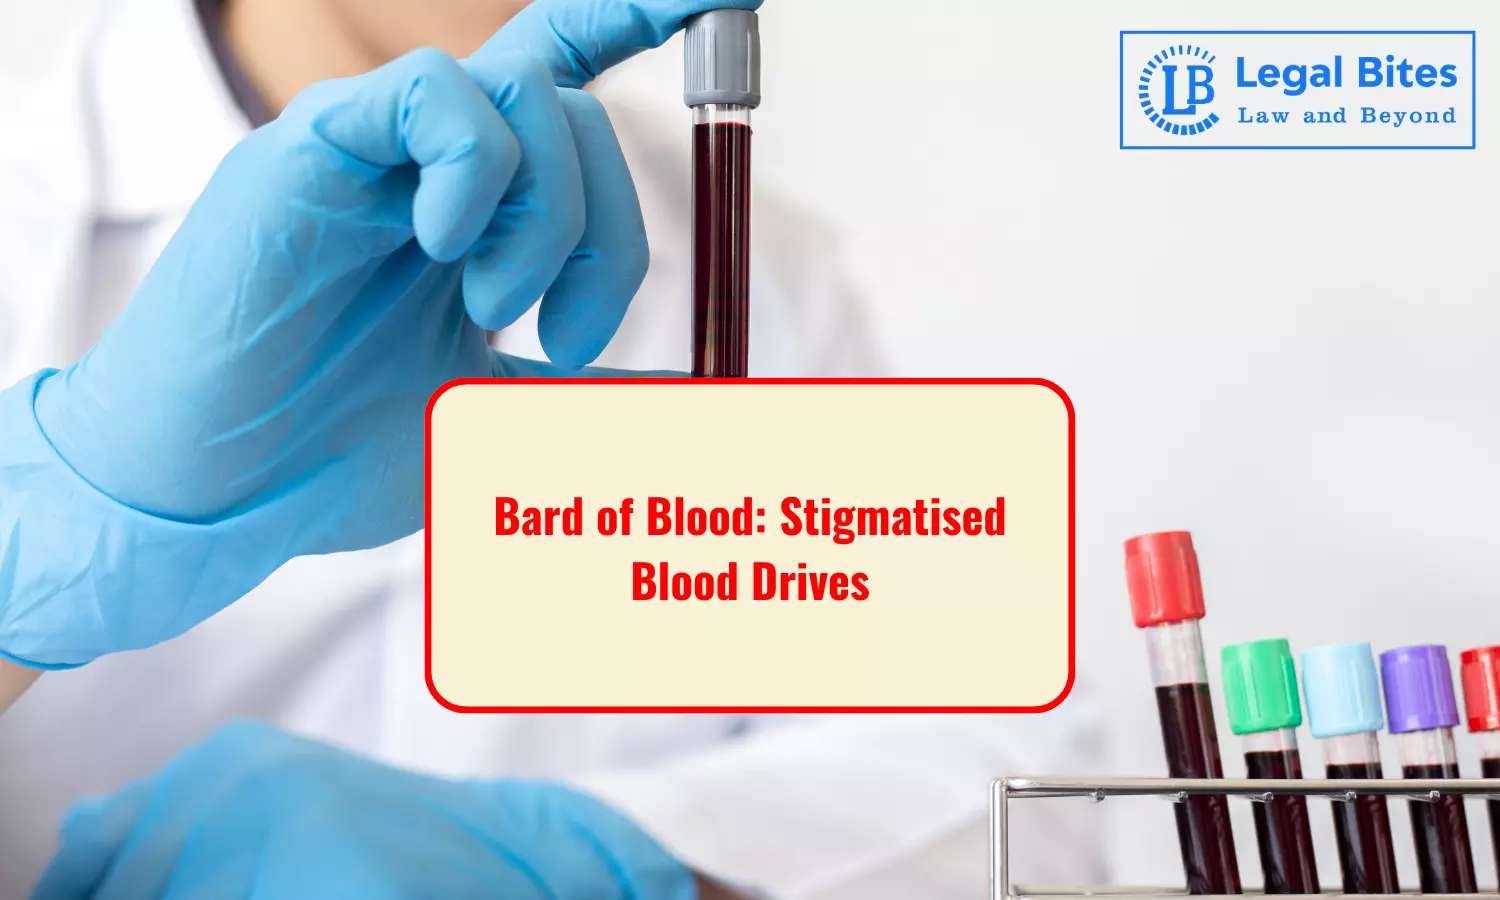 Bard of Blood: Stigmatised Blood Drives